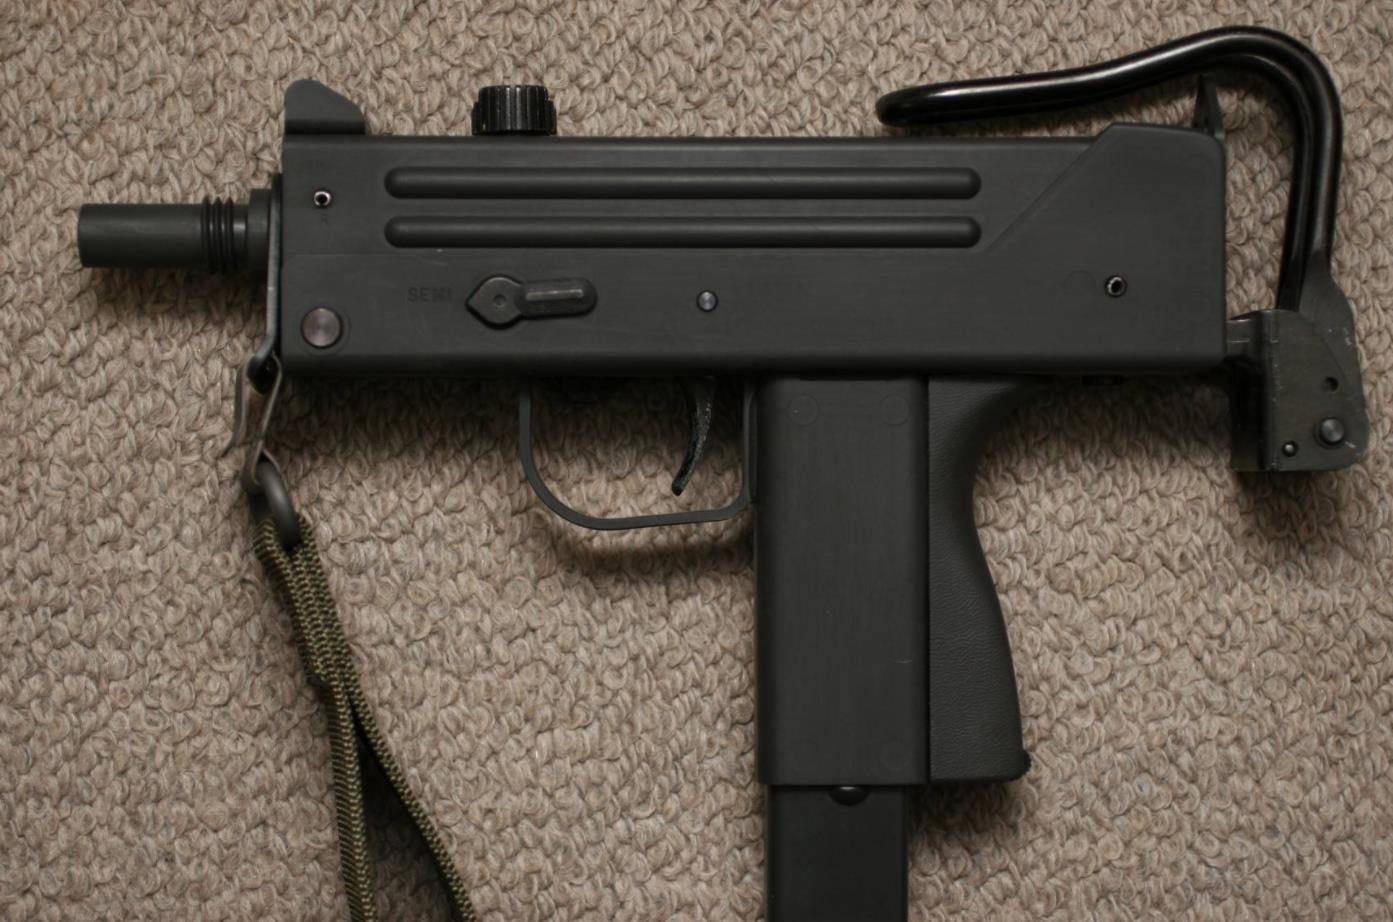 m11冲锋枪也叫做mac-11,它是在mac-10冲锋枪的基础上改进而来,但它的